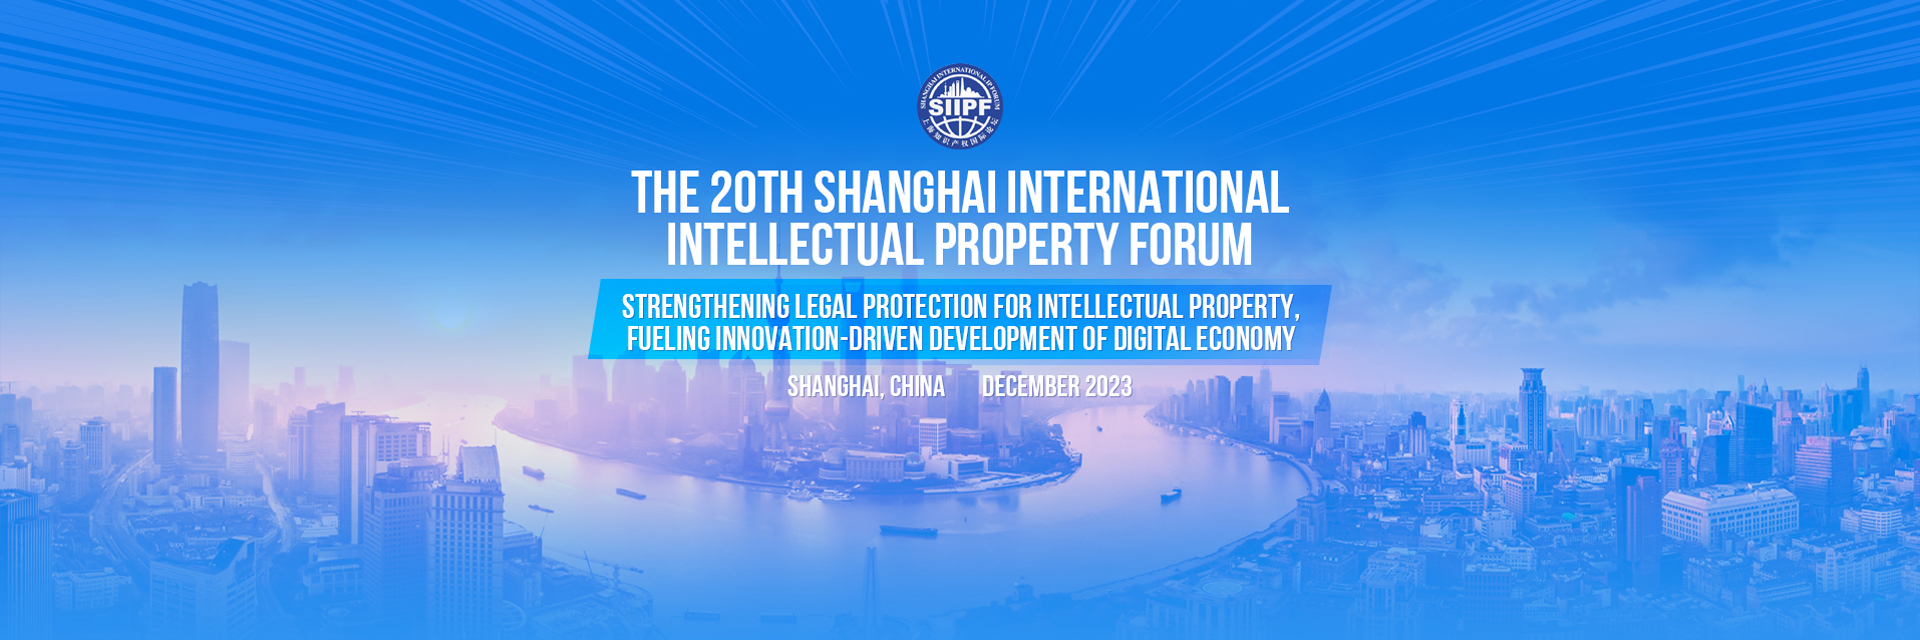 The 20th Shanghai International Intellectual Property Forum